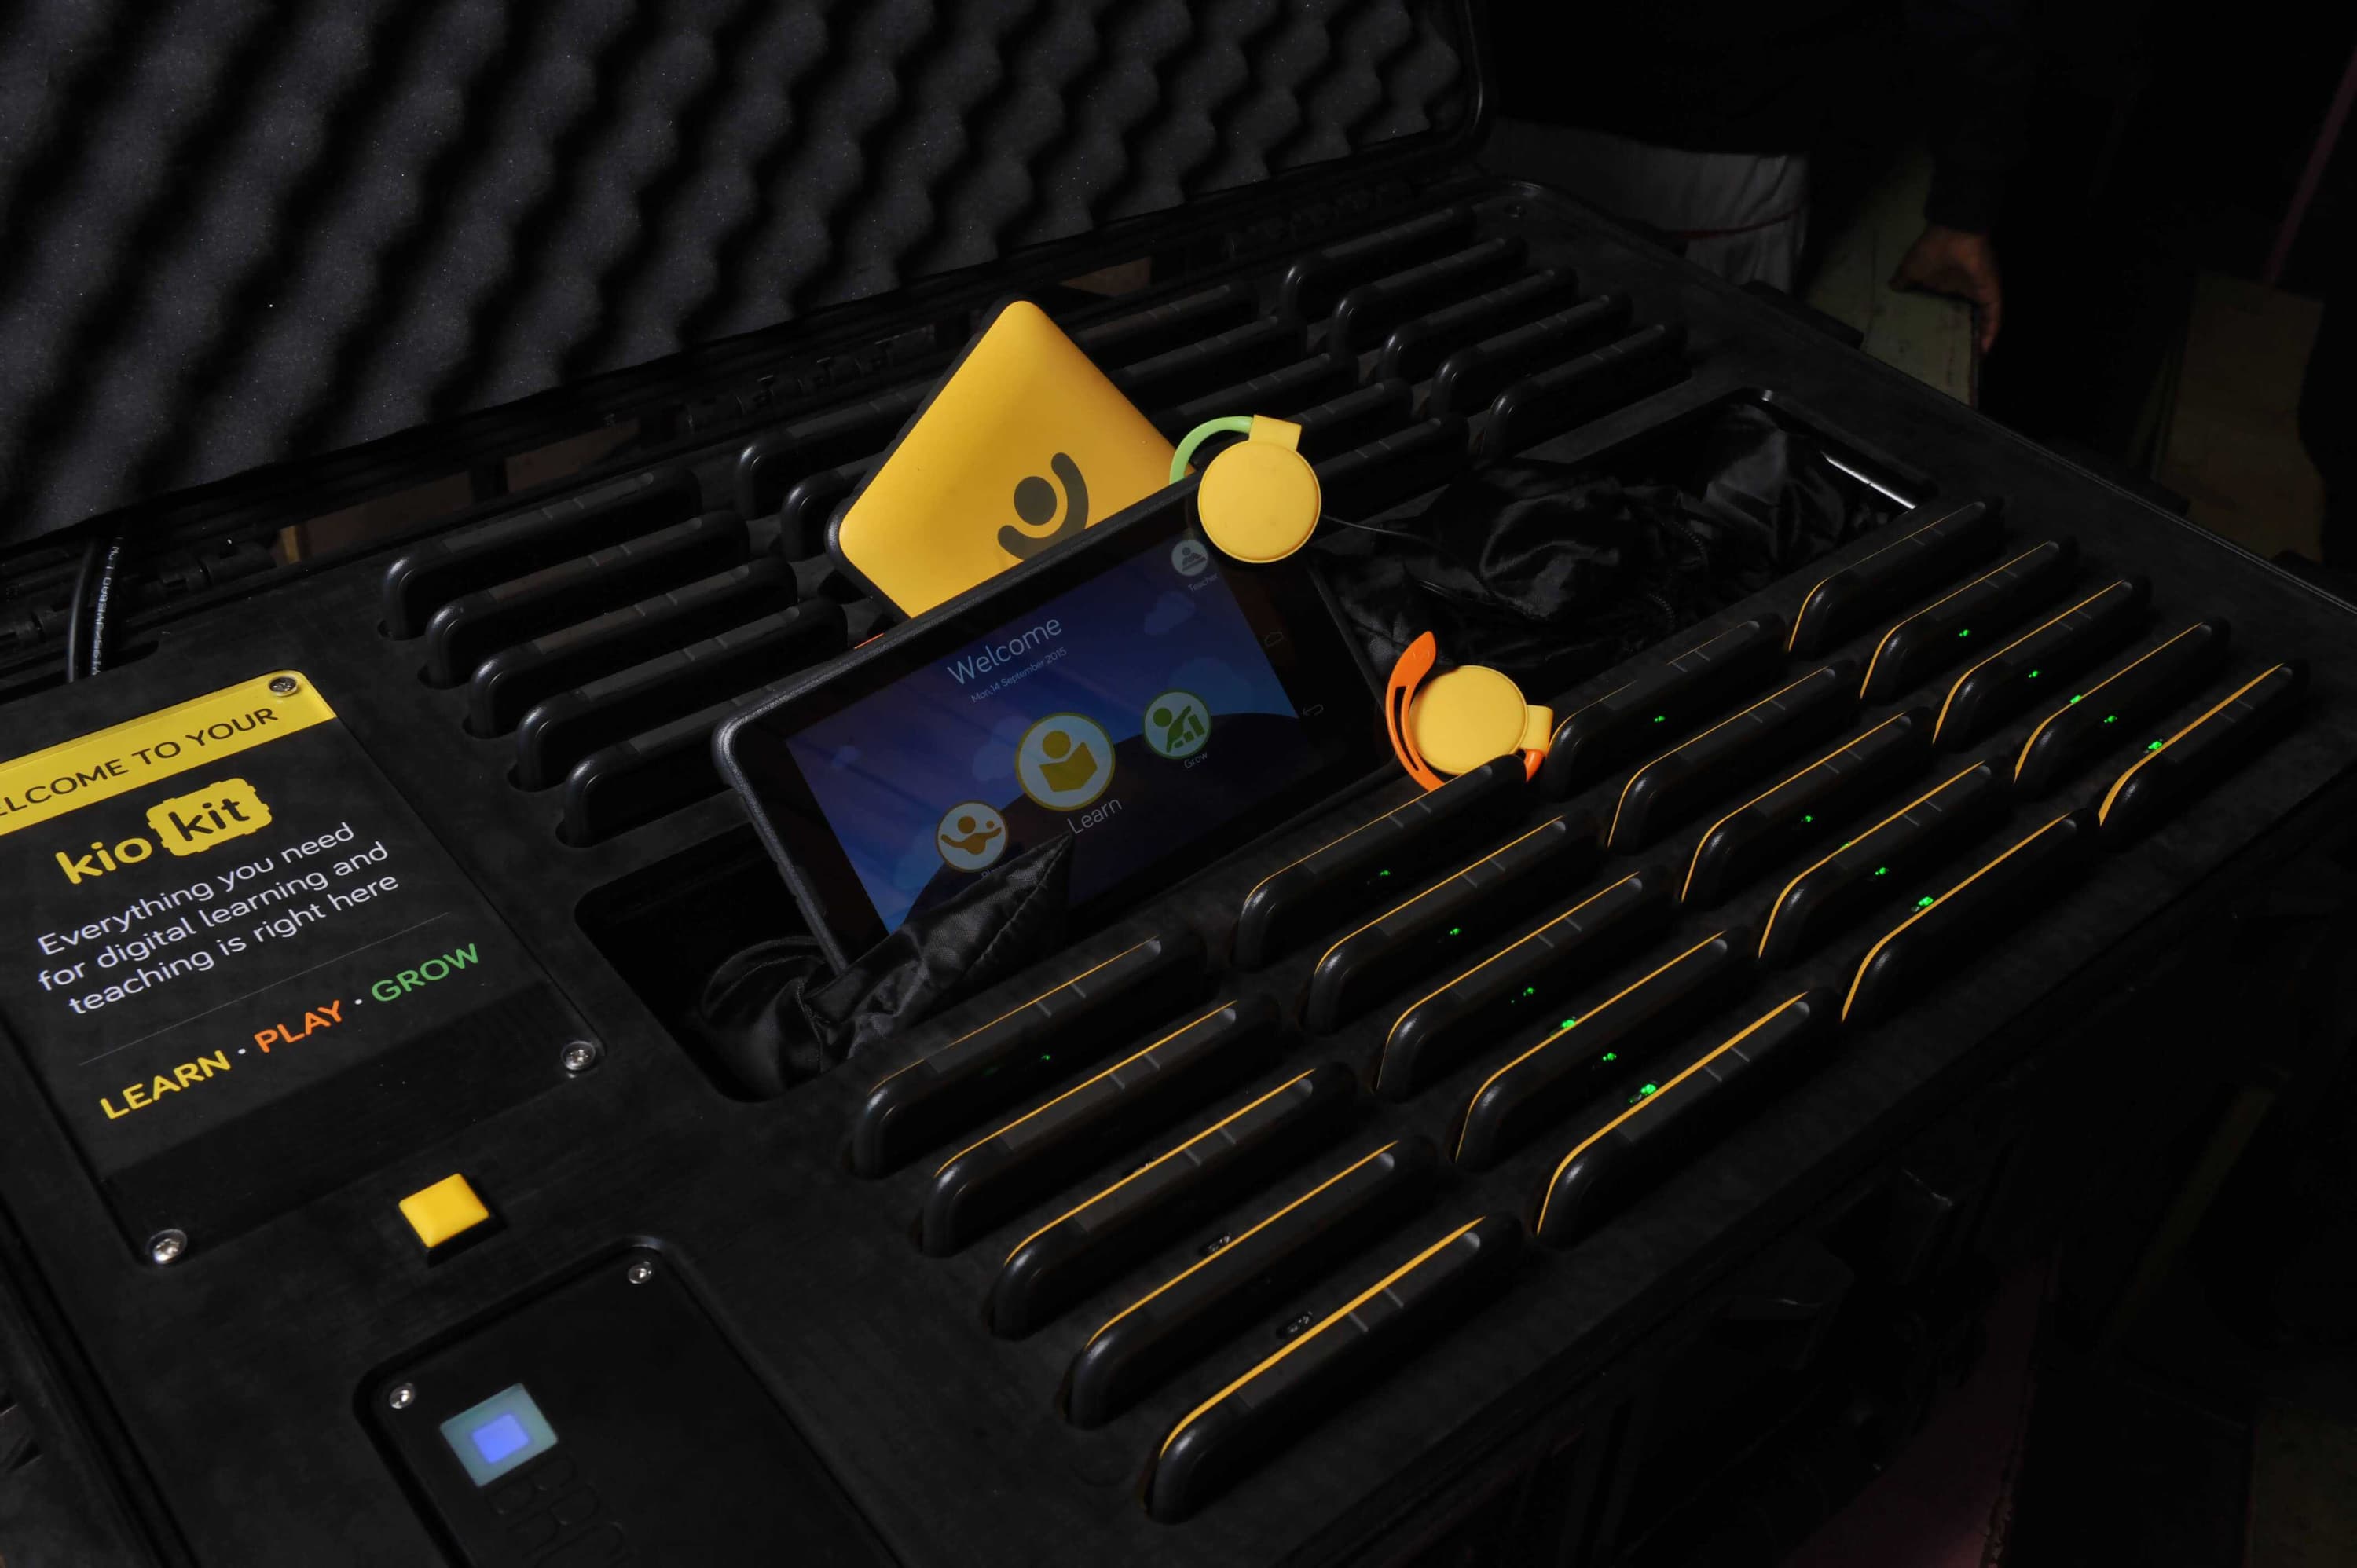 Kio kit tablets cradled in charging case